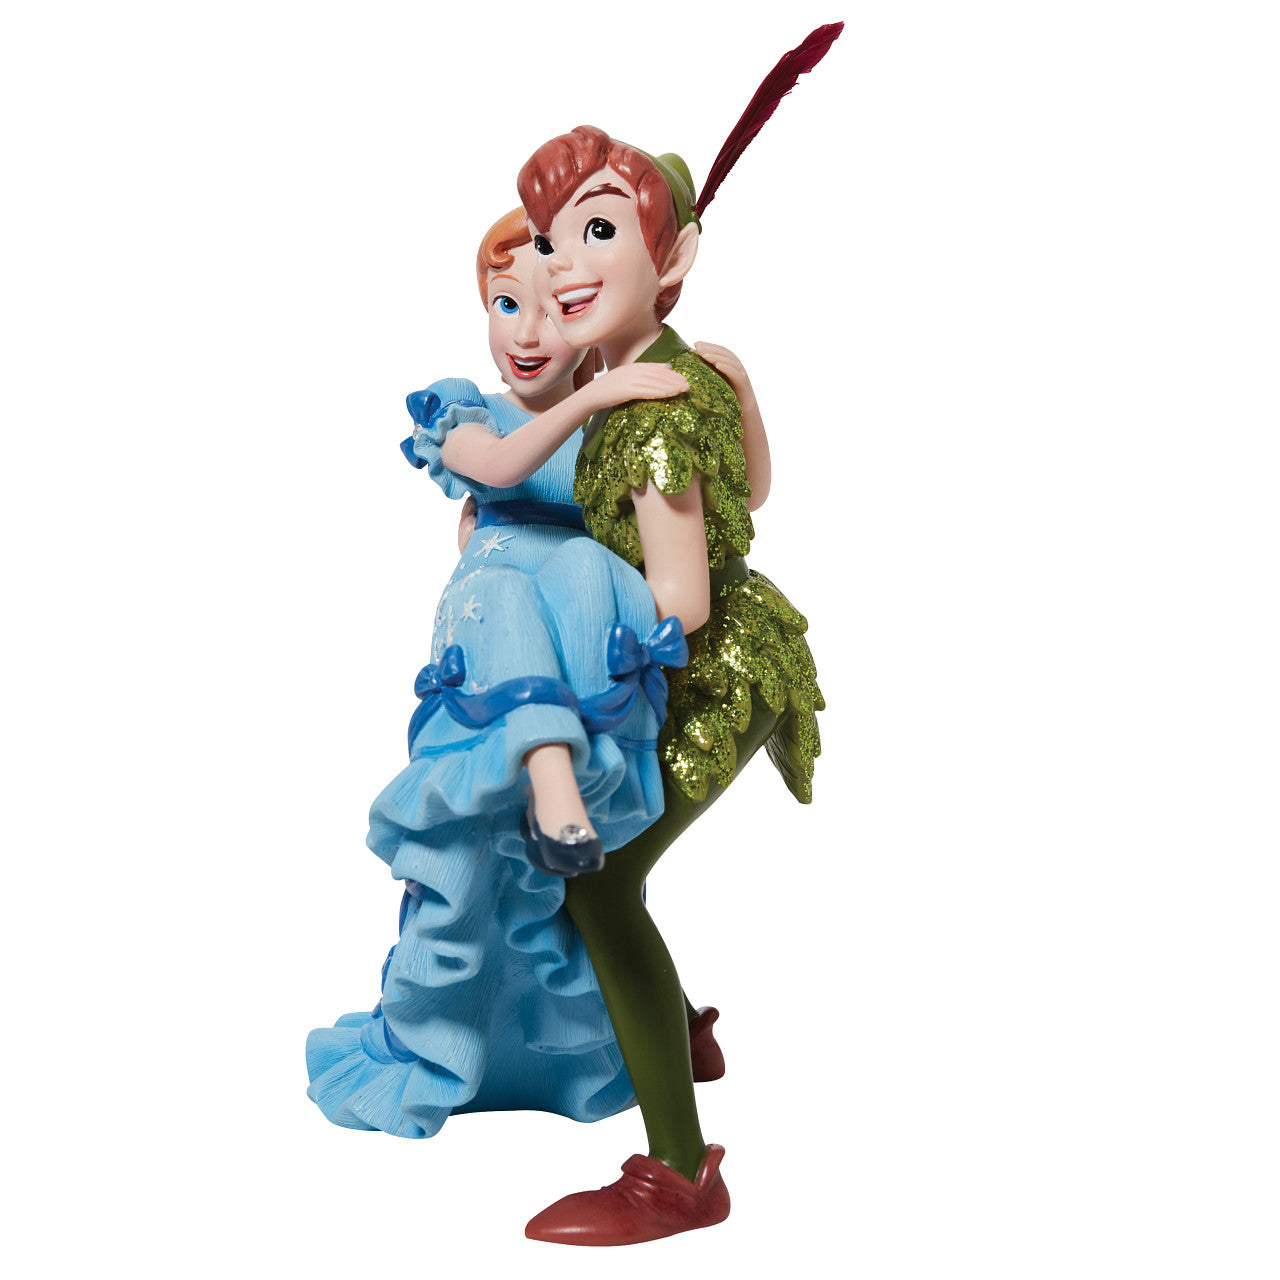 Peter Pan and Wendy Darling Figurine